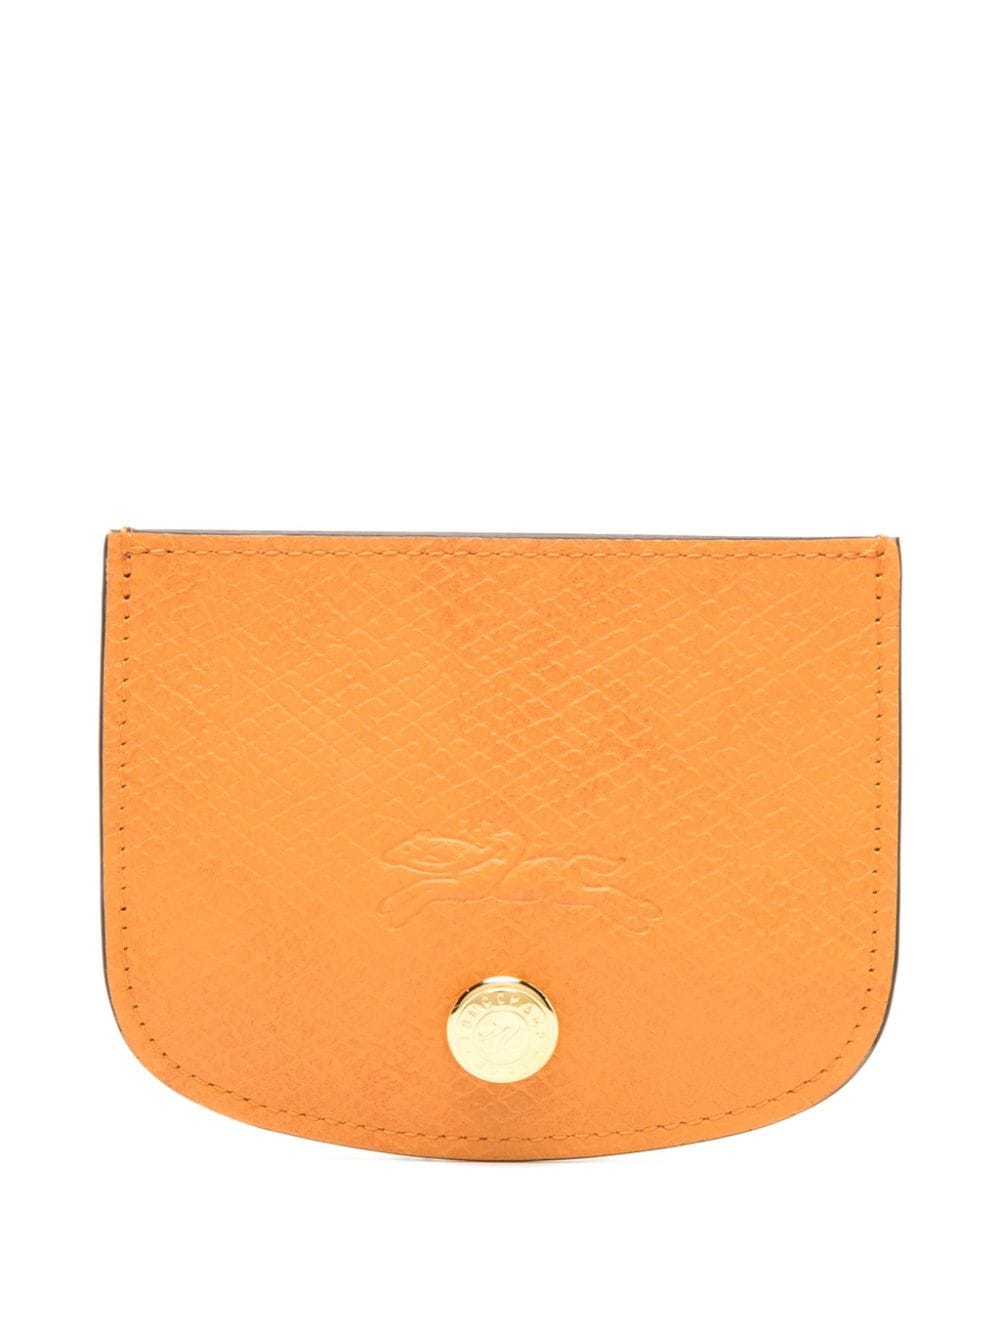 Longchamp Épure Leather Cardholder In Orange